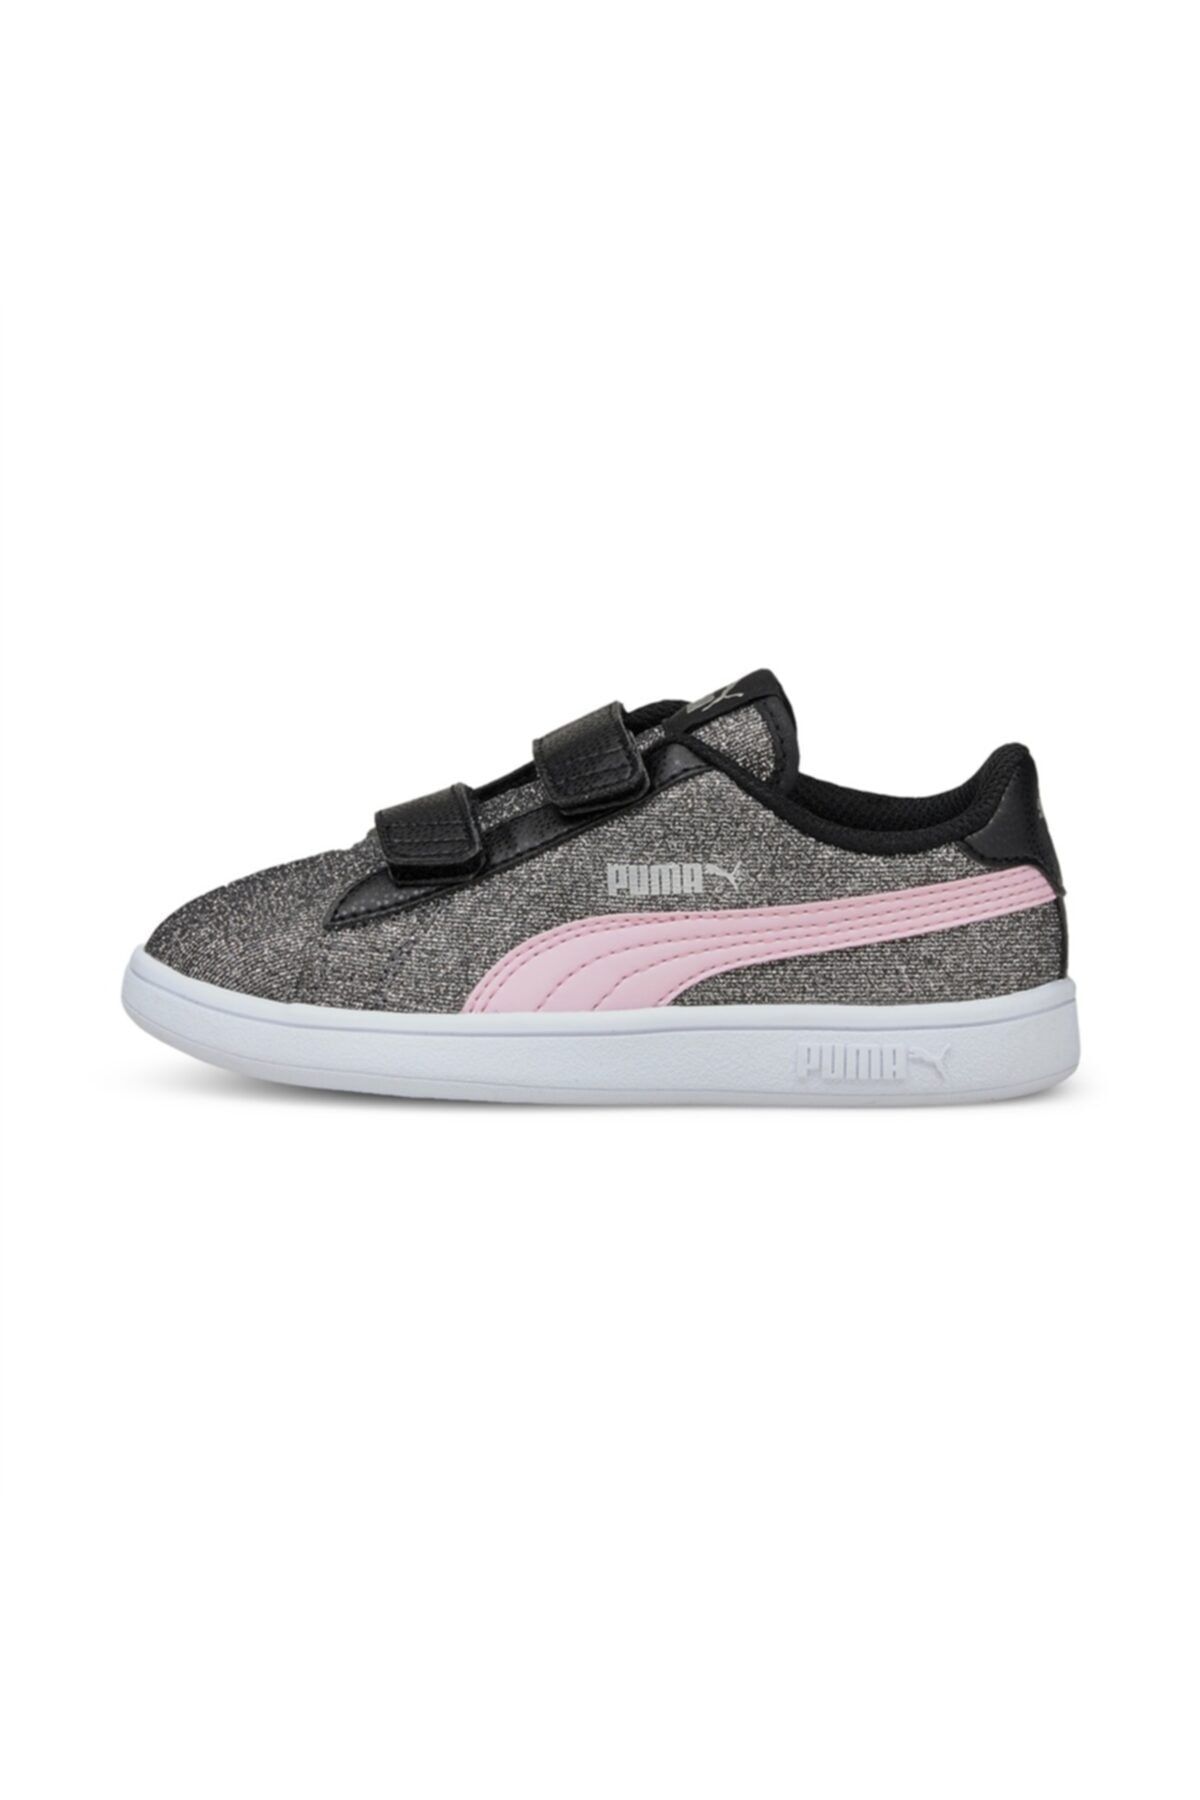 Puma SMASH V2 GLITZ GLAM Siyah Kız Çocuk Sneaker Ayakkabı 101085094